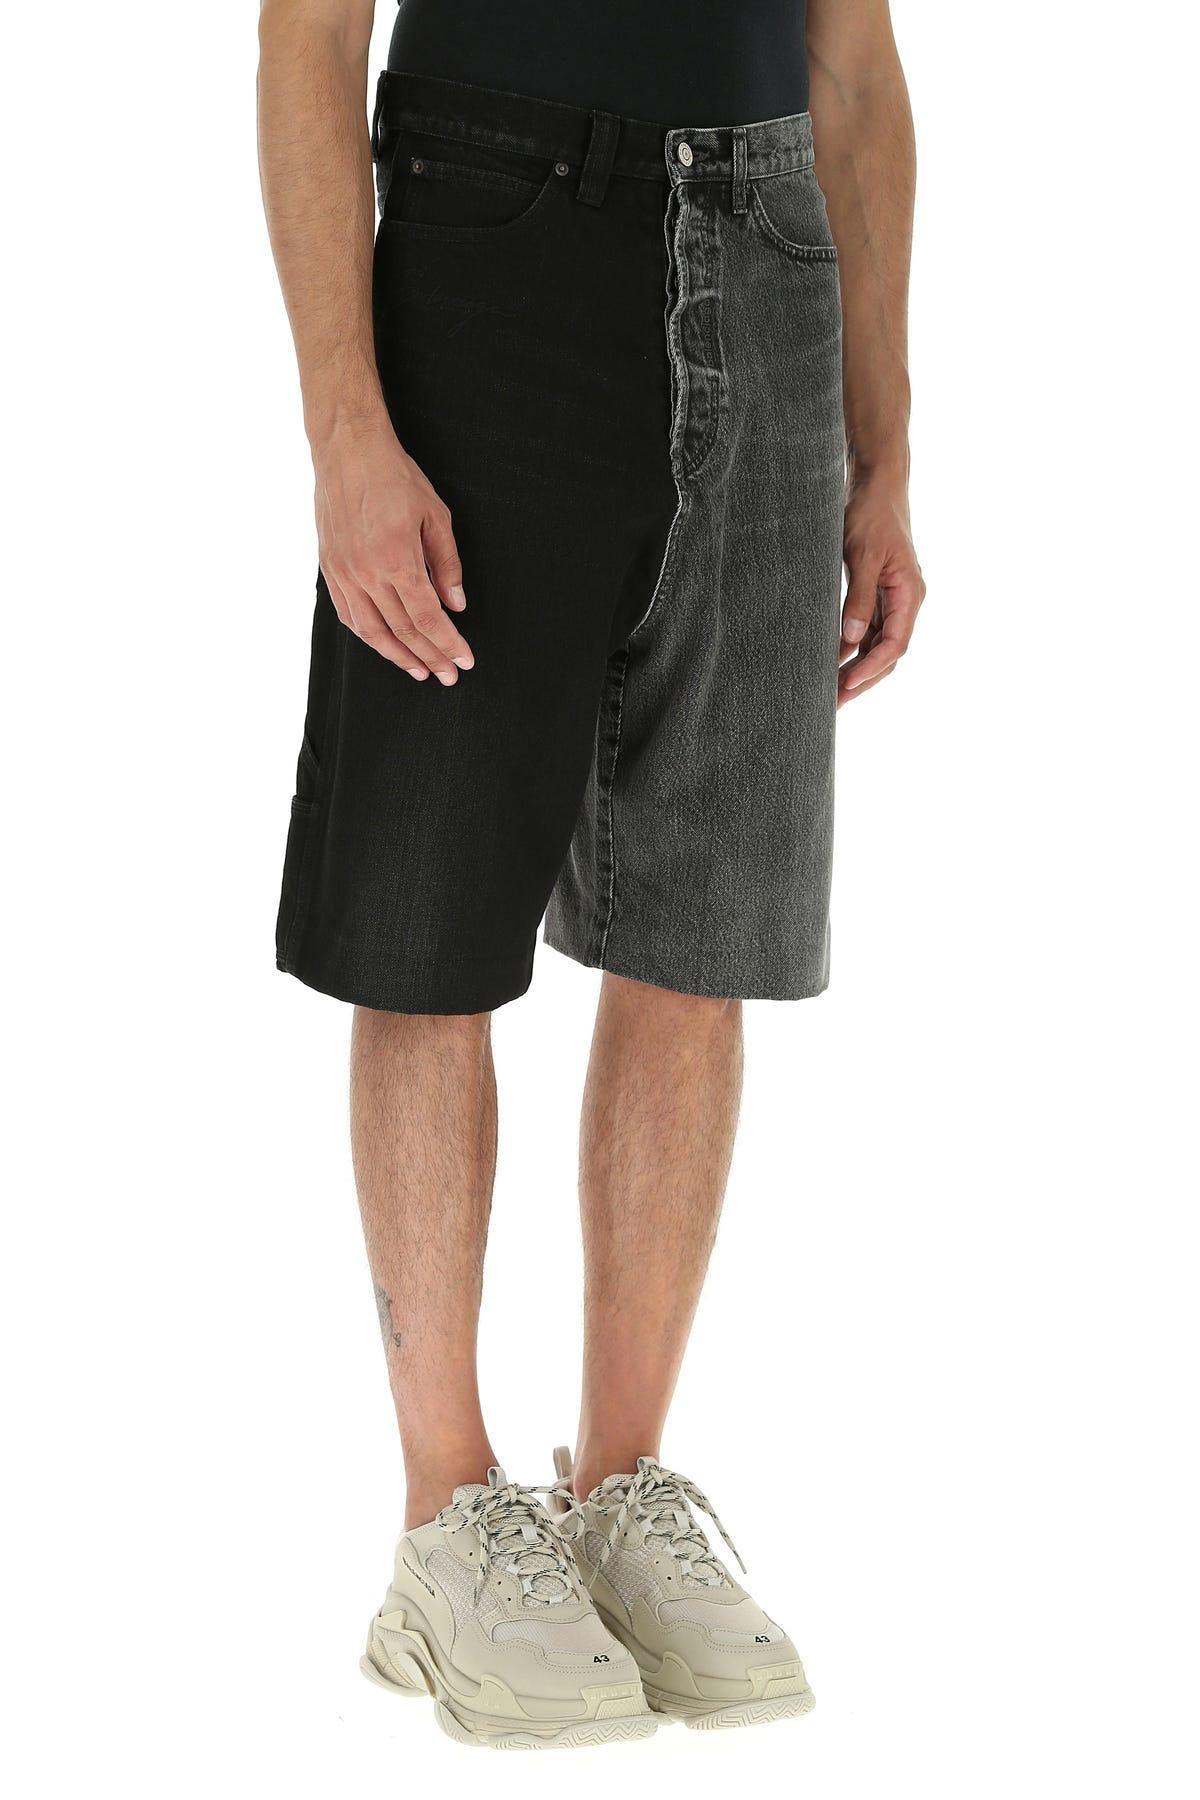 Balenciaga Two-tone Denim Bermuda Shorts in Black for Men - Save ...